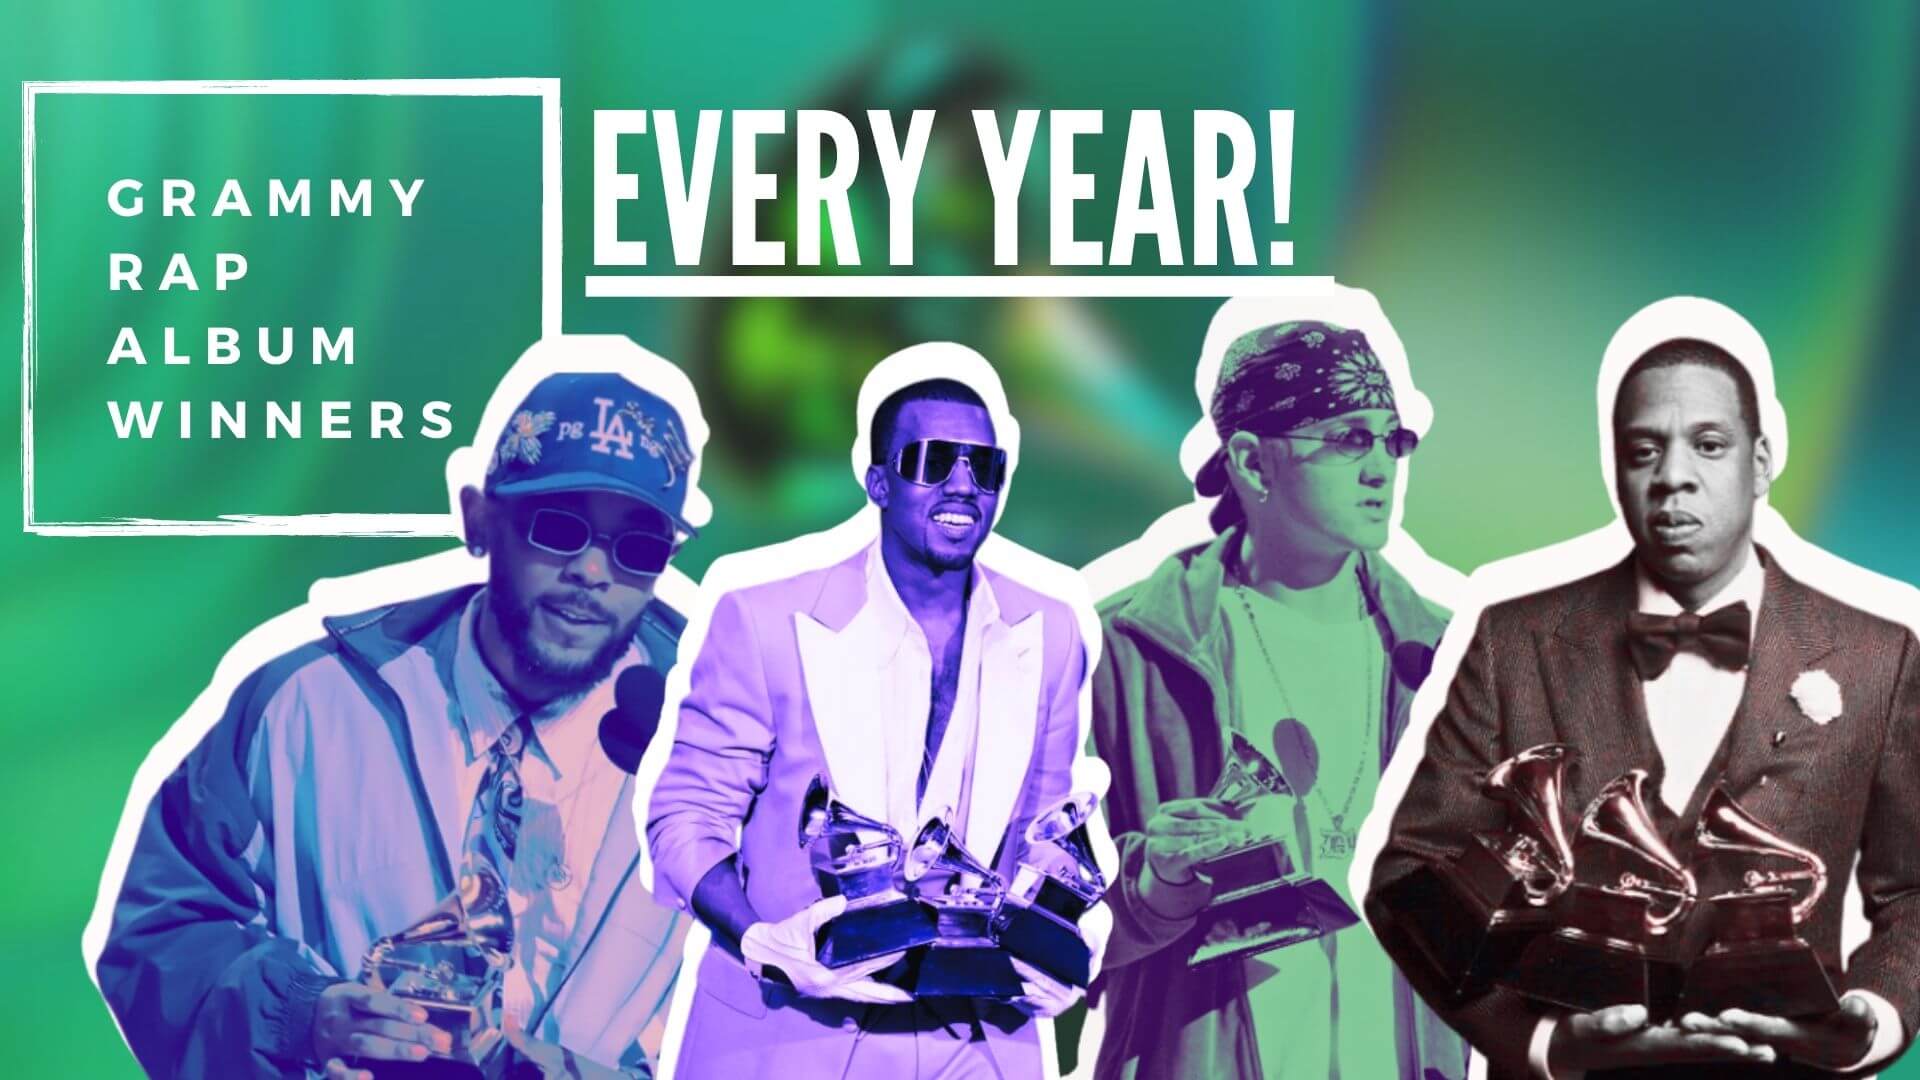 Grammys Best Rap Album Winners Every Year from 1996